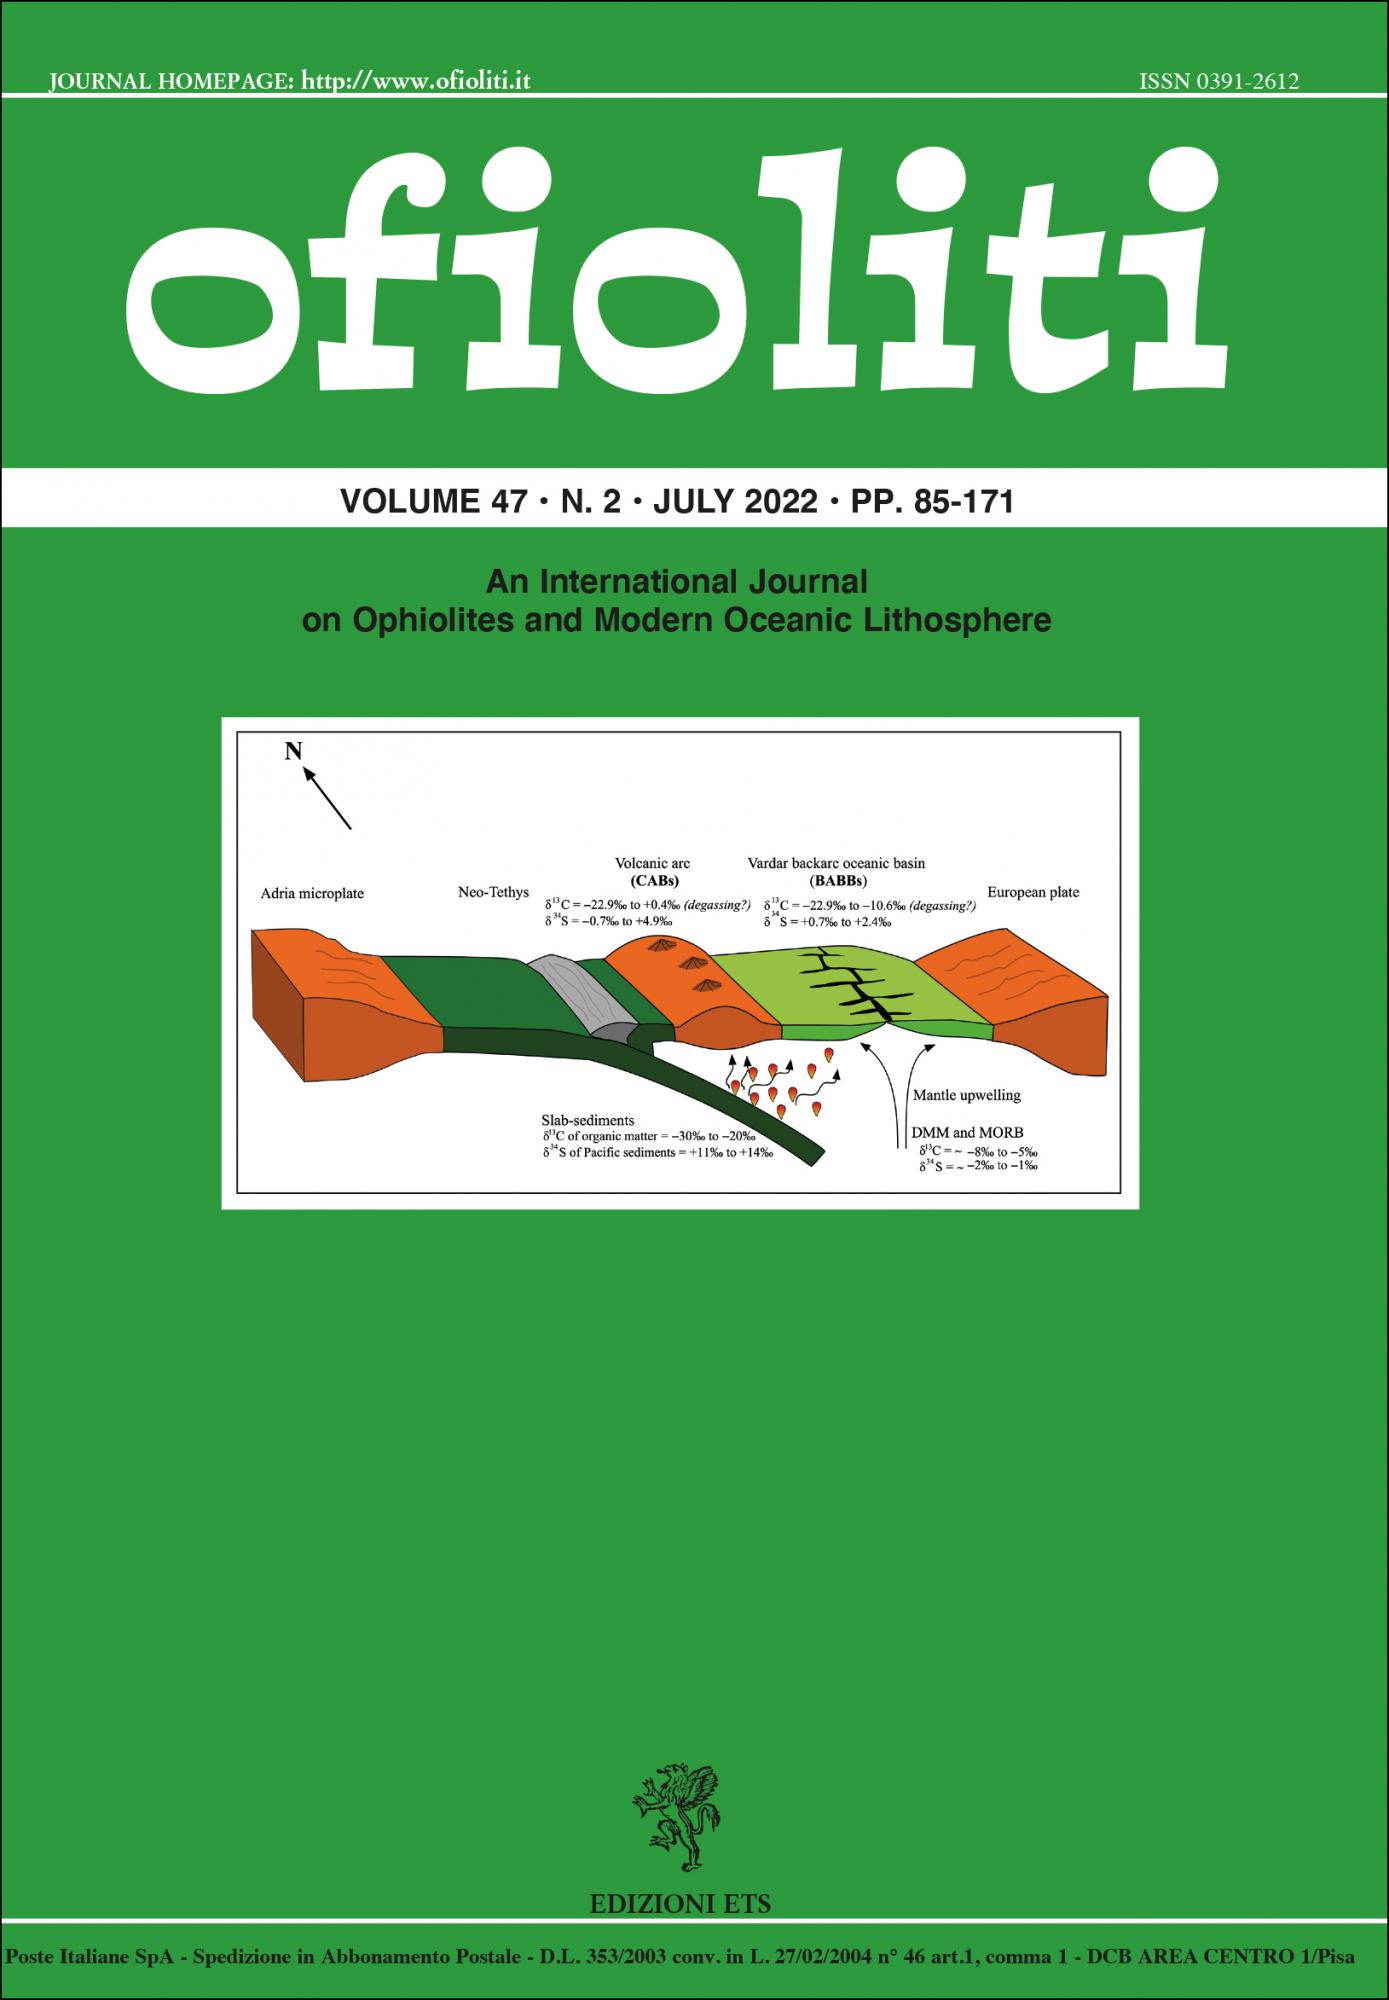 Ofioliti, vol. 47/n. 2-2022.An International Journal on Ophiolites and Modern Oceanic Lithosphere